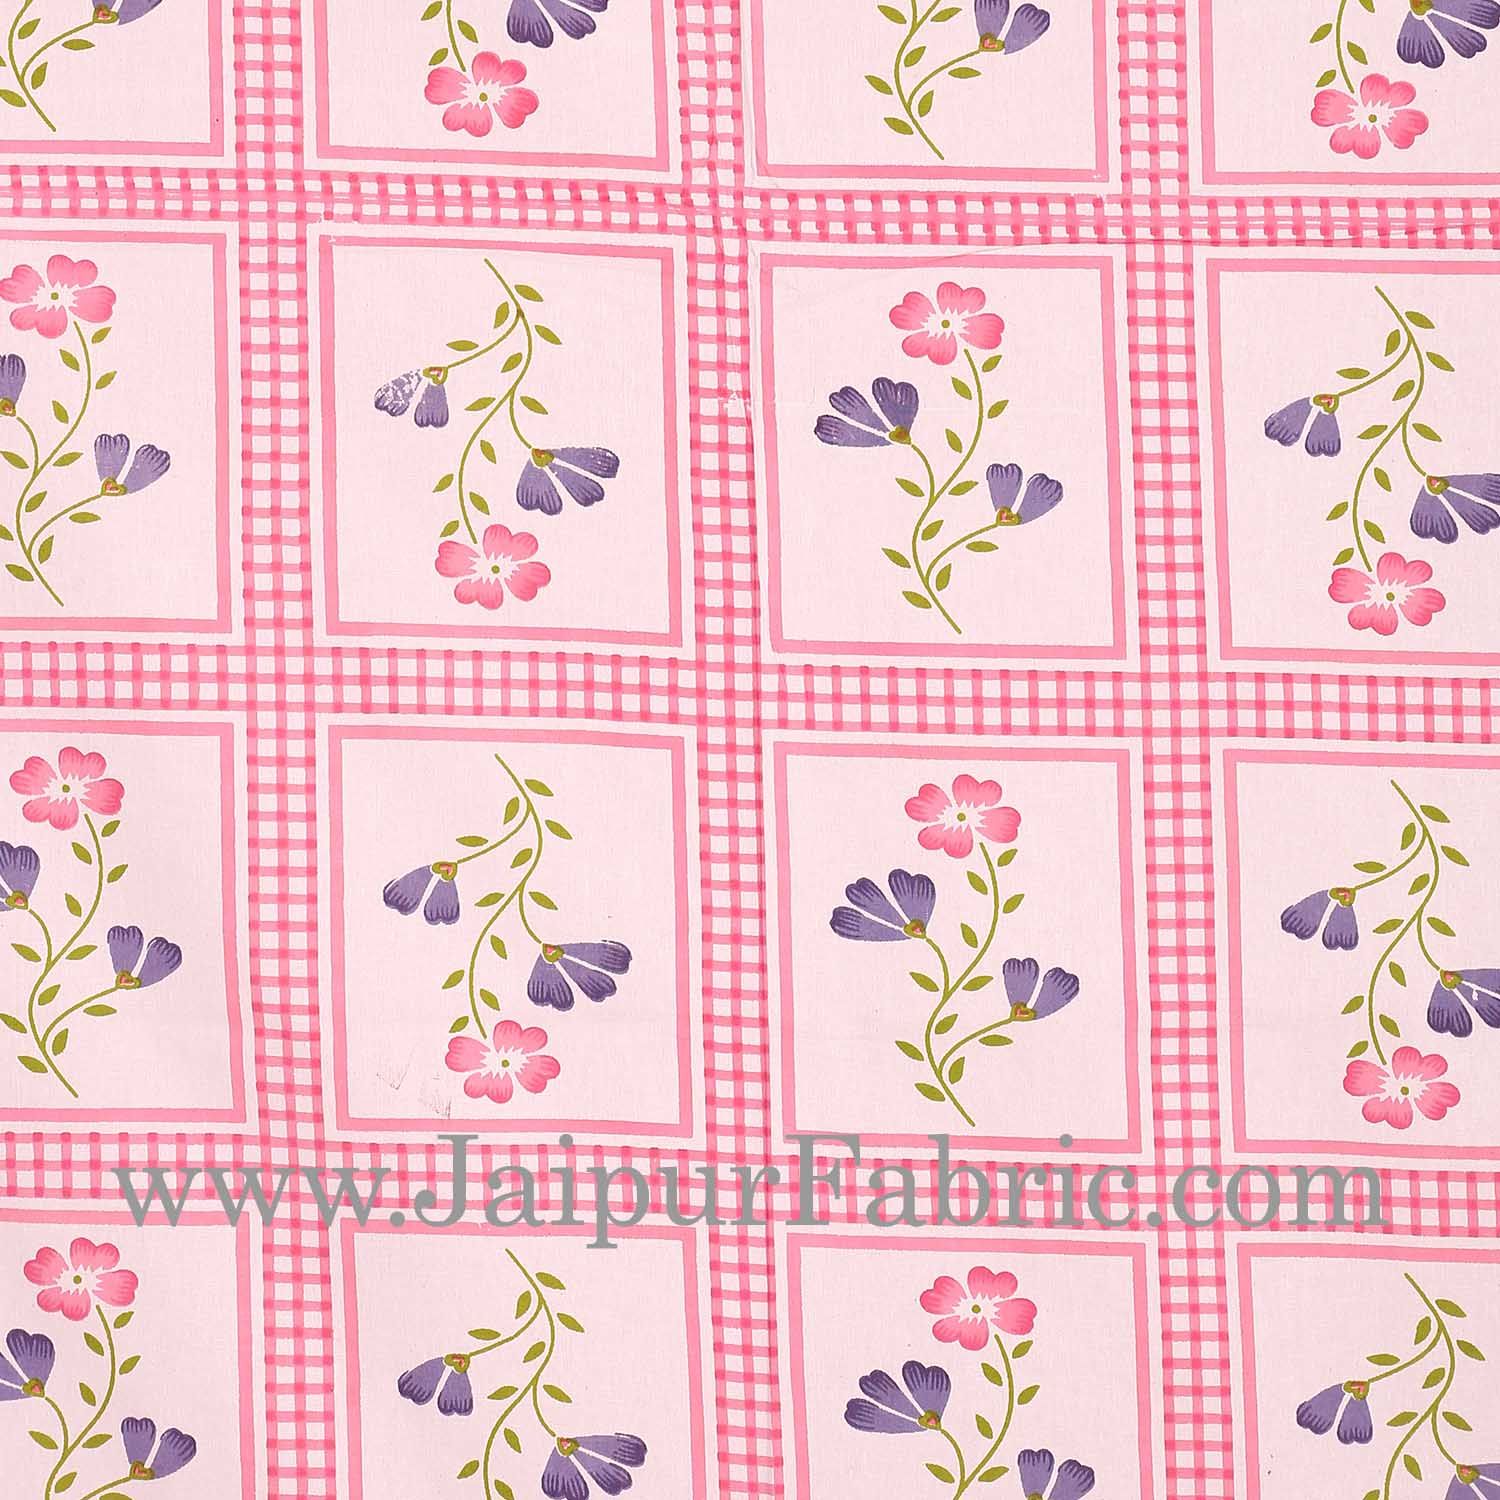 Pink Border Cream Base Floral Print In Checks Diwan Set